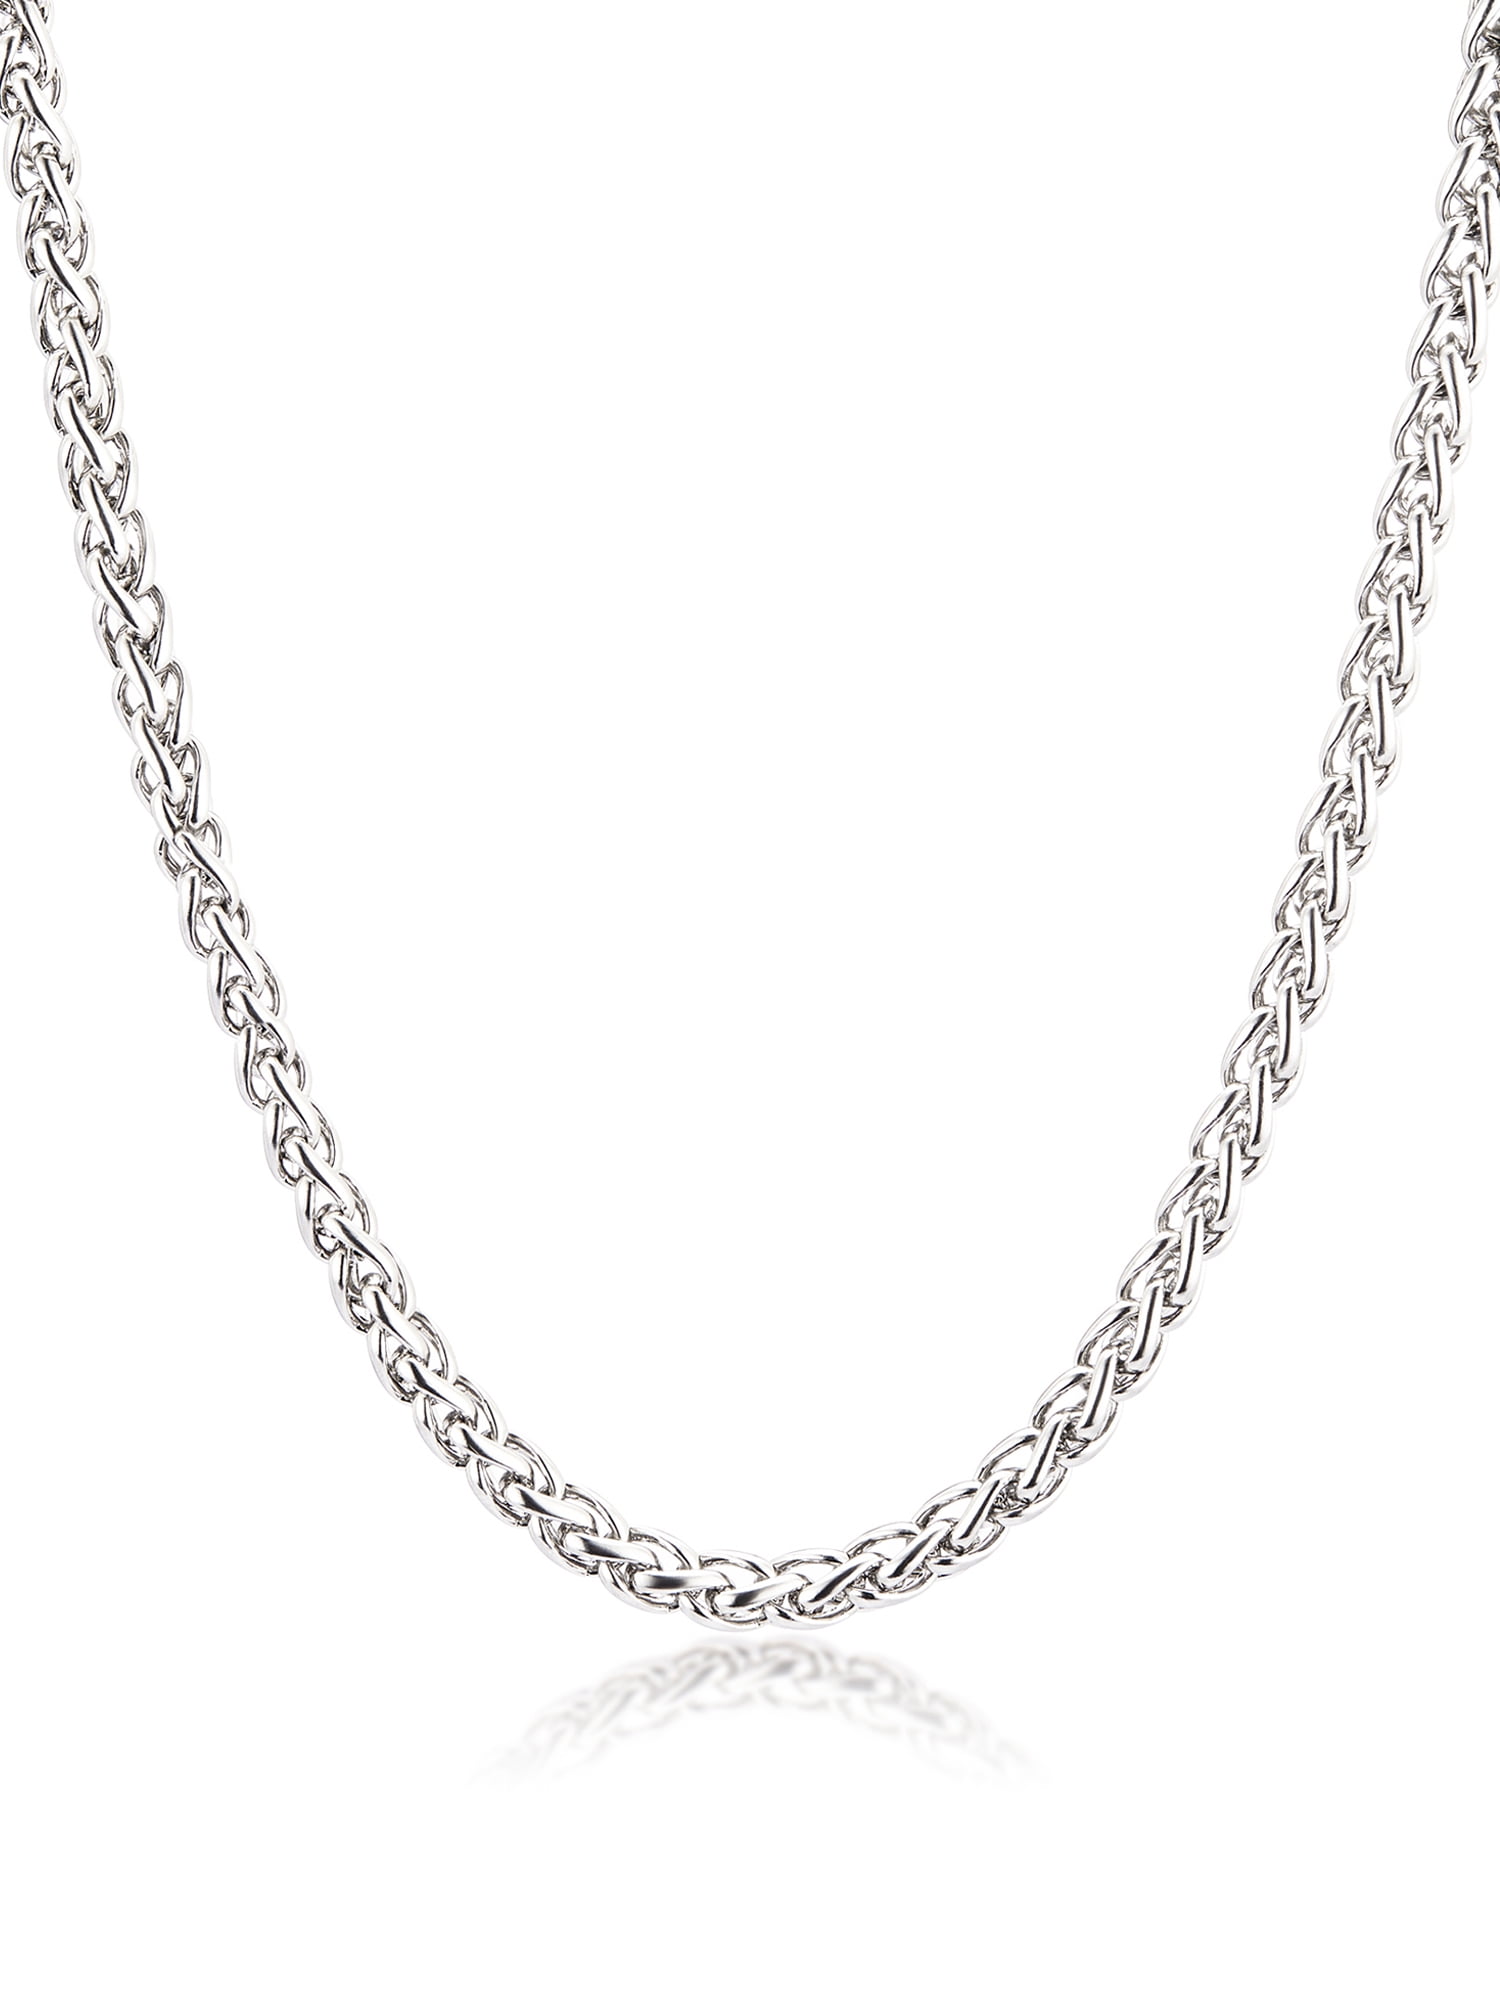 Buy Ankur Treasure Chest 950 Platinum Spiga Chain Necklace, 950 Platinum  Necklace, Spiga Chain, 950 Platinum Chain, Princess Length Necklace at  ShopLC.